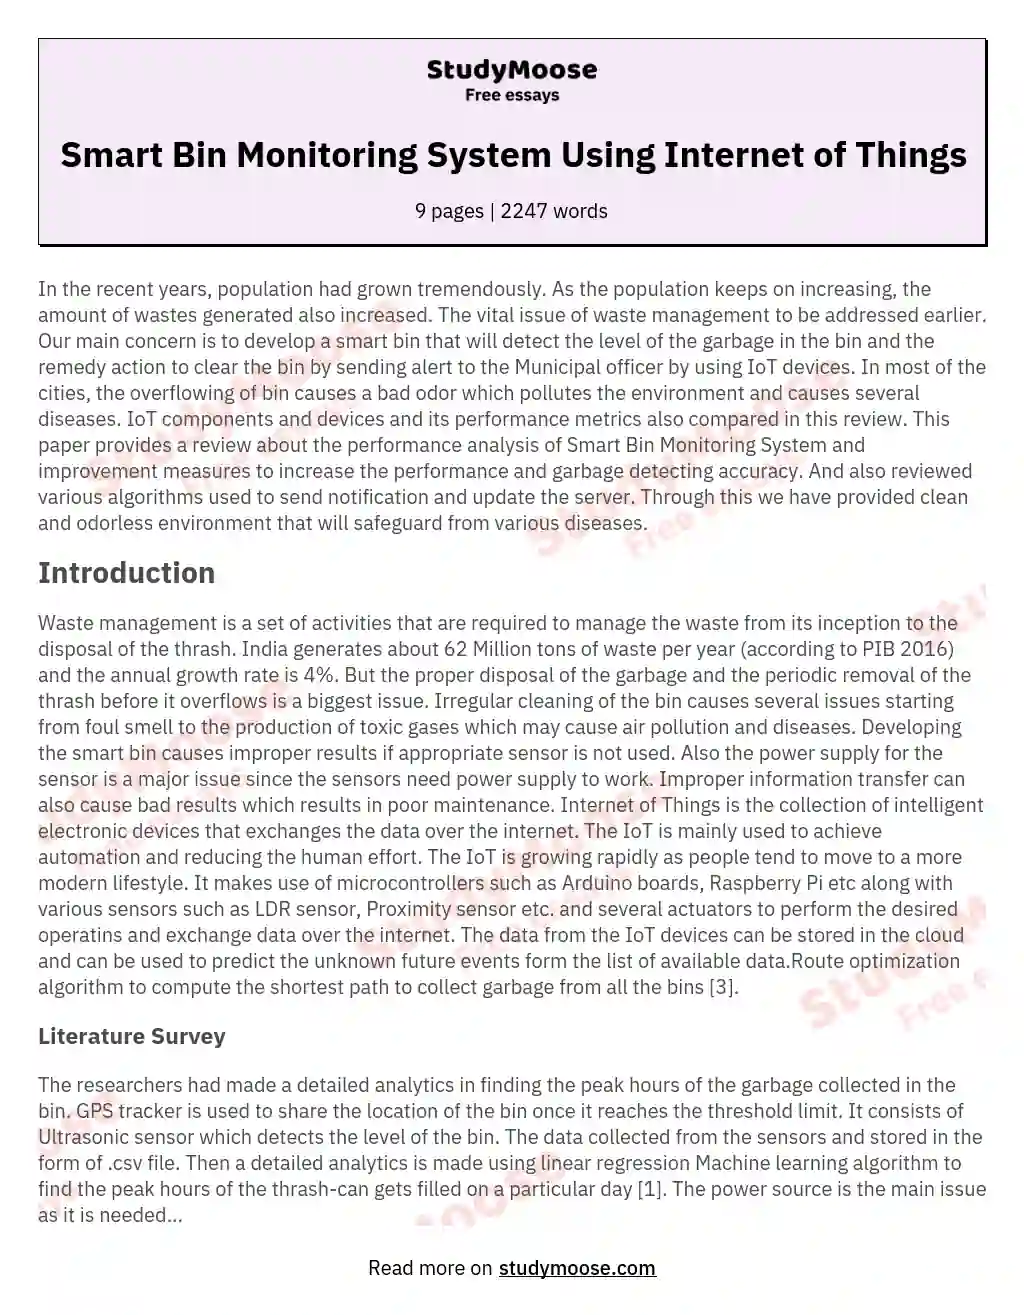 Smart Bin Monitoring System Using Internet of Things essay